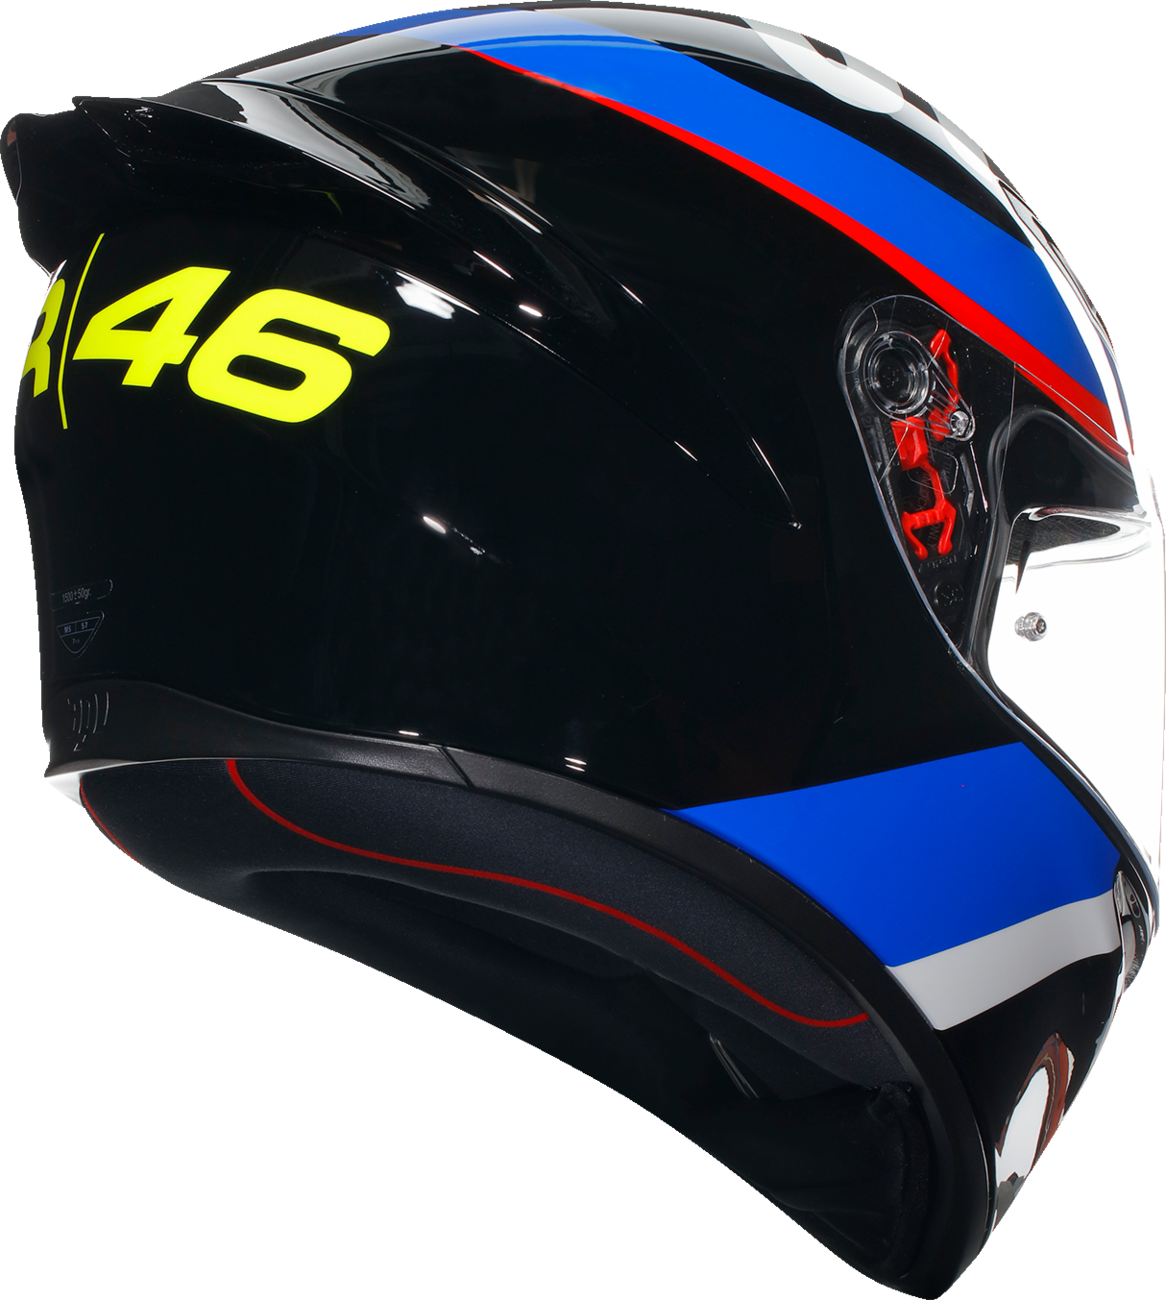 AGV K1 S Helmet - VR46 Sky Racing Team - Black/Red - Medium 2118394003023M